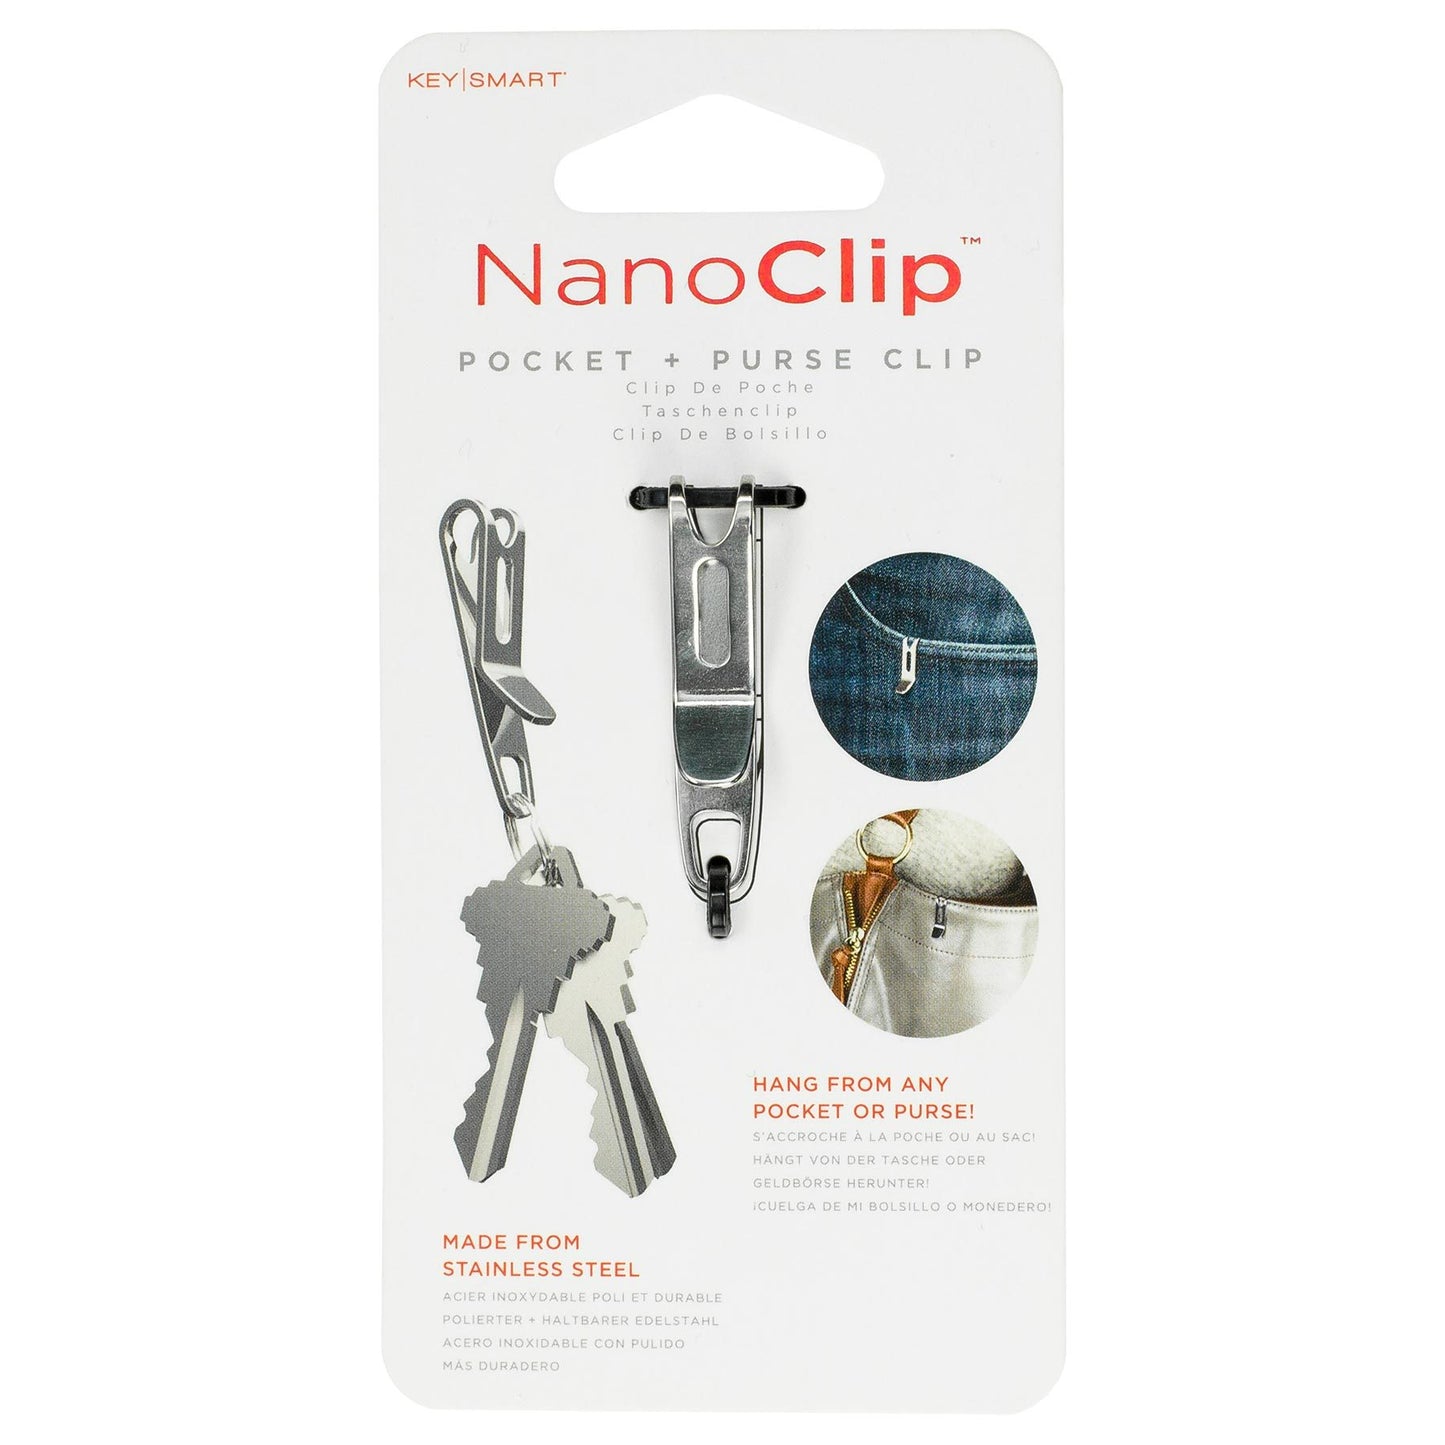 NanoClip